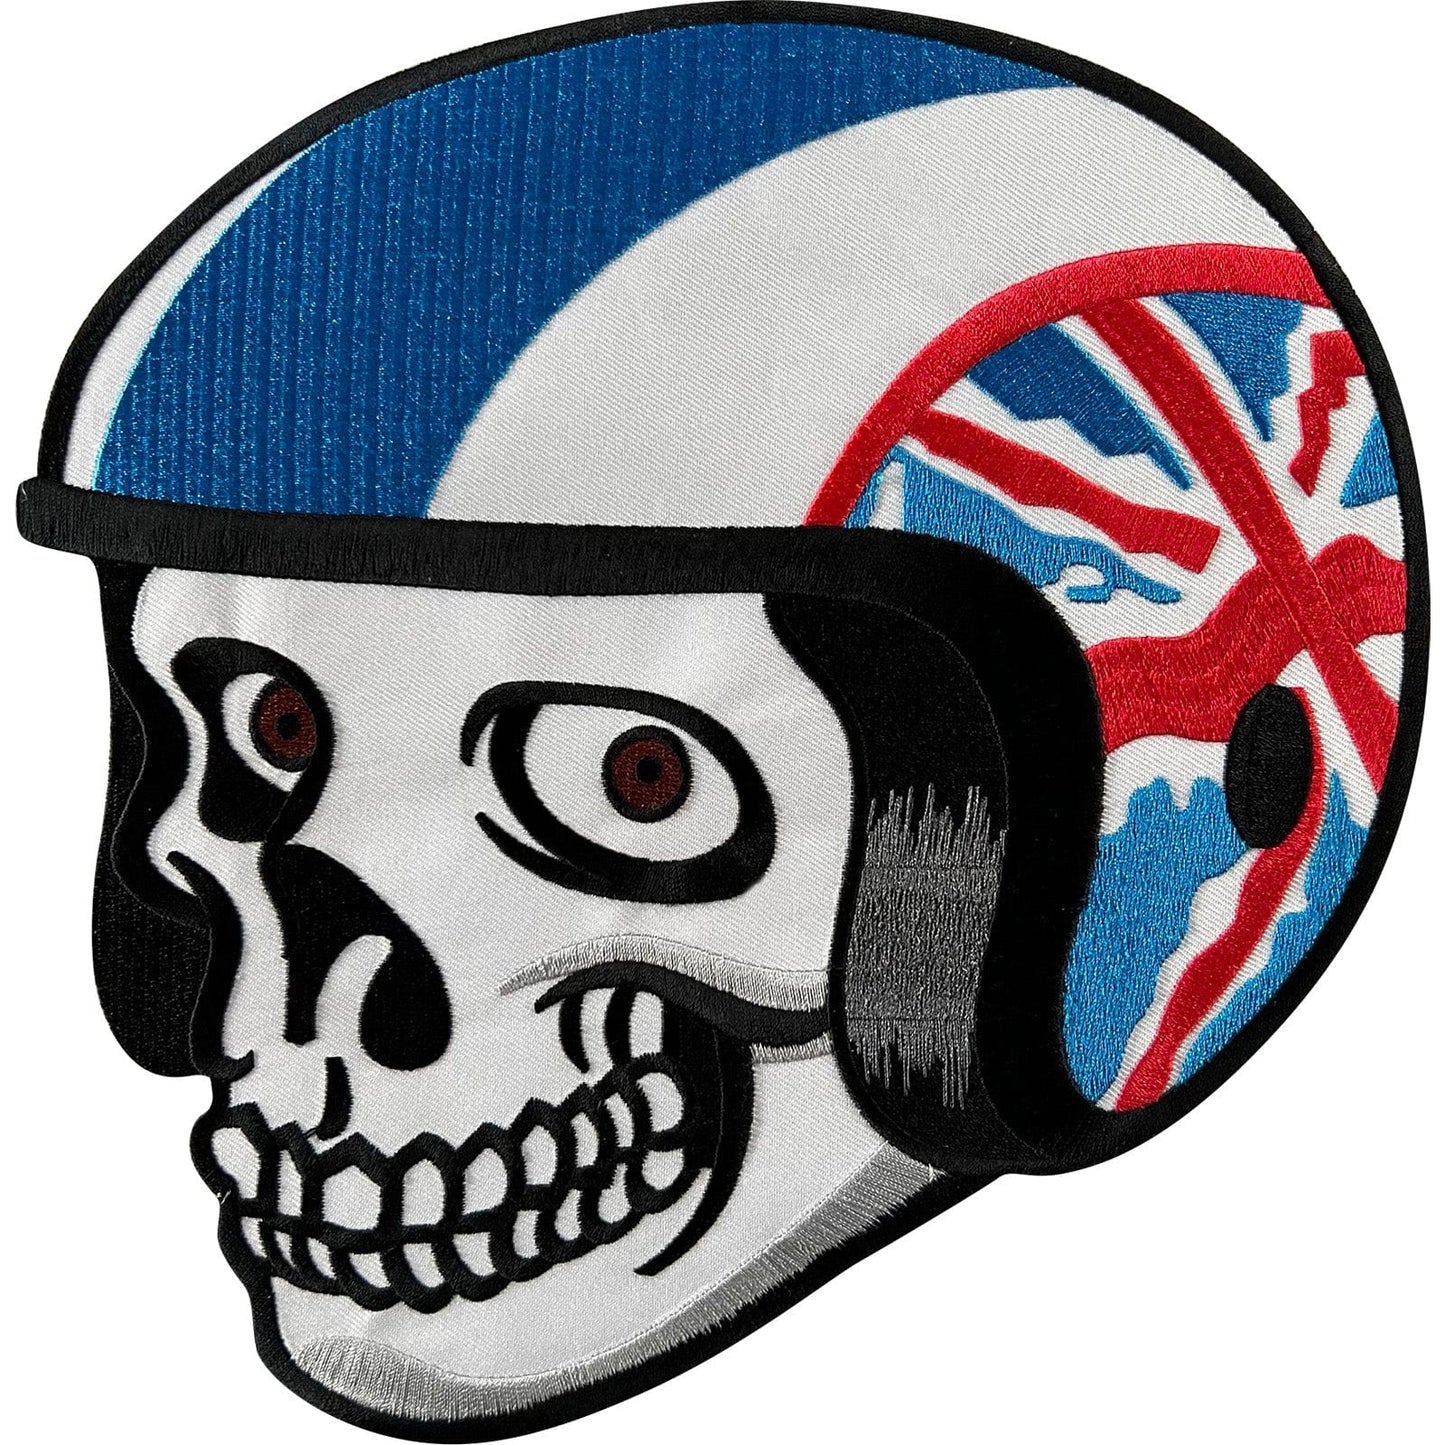 Big Large Skull Union Jack Flag Helmet Patch Iron On Sew On UK Embroidered Badge